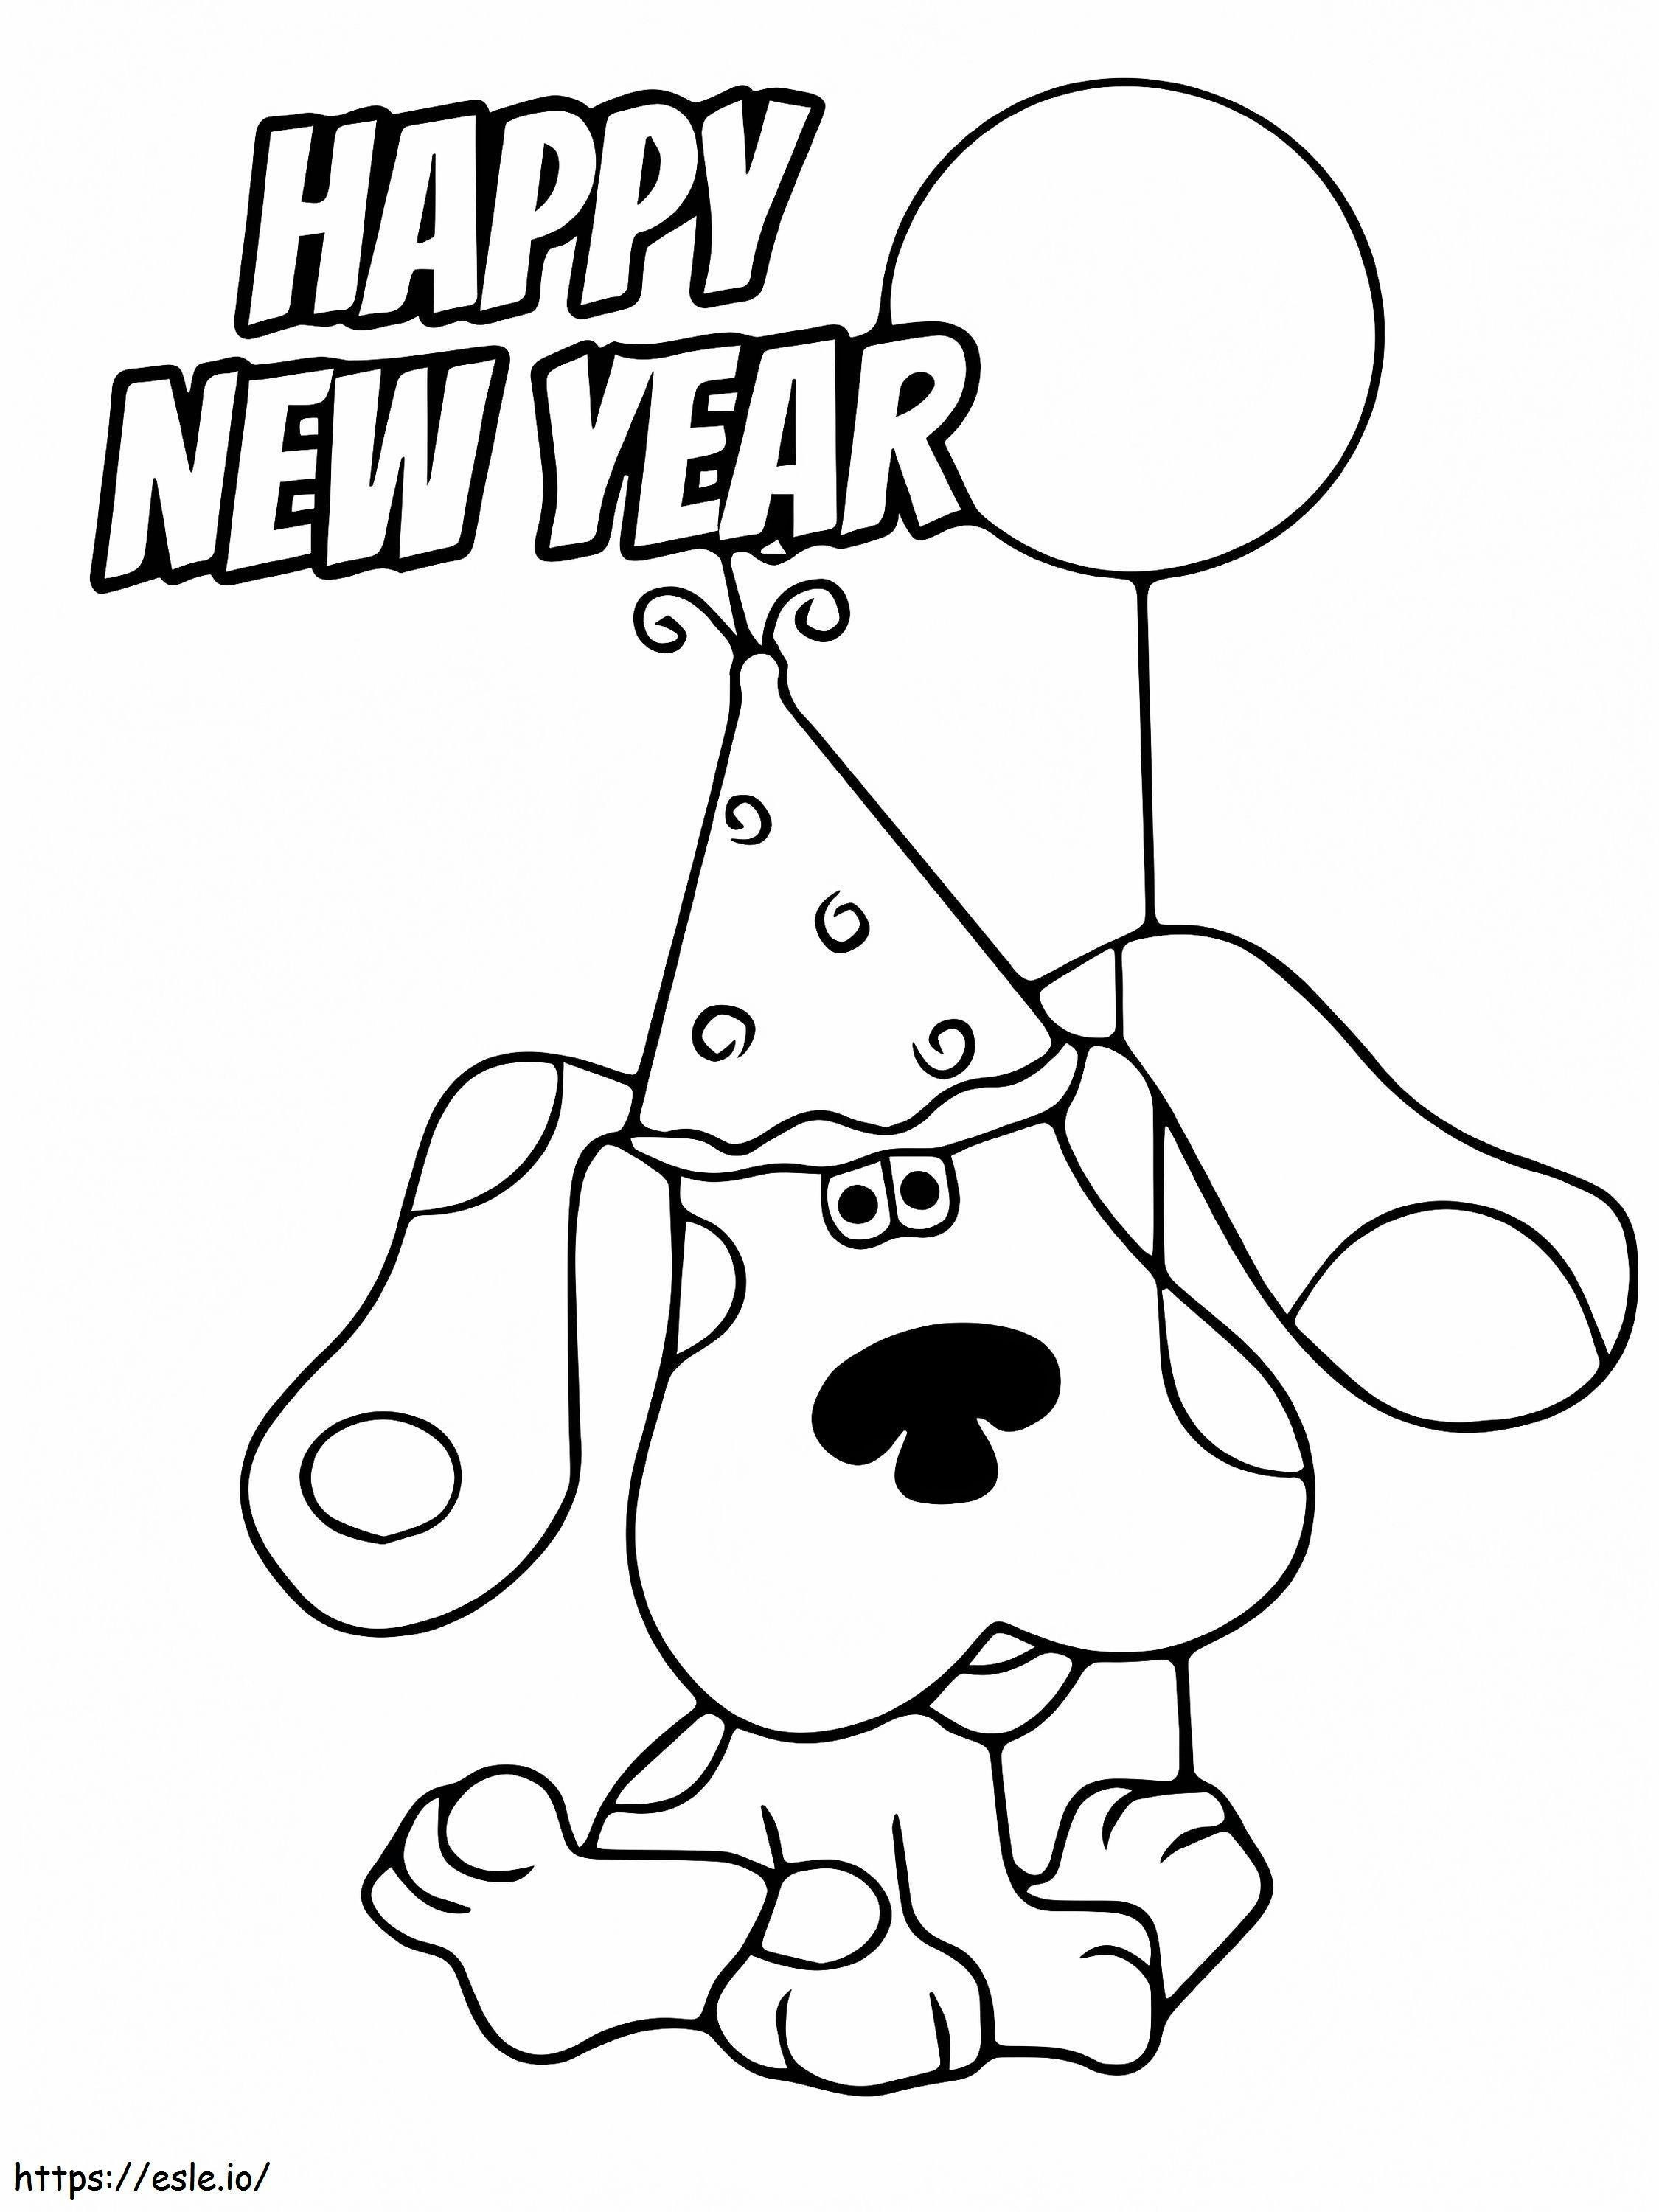 Gelukkig Nieuwjaar met hond ontwerp kleurplaat kleurplaat kleurplaat